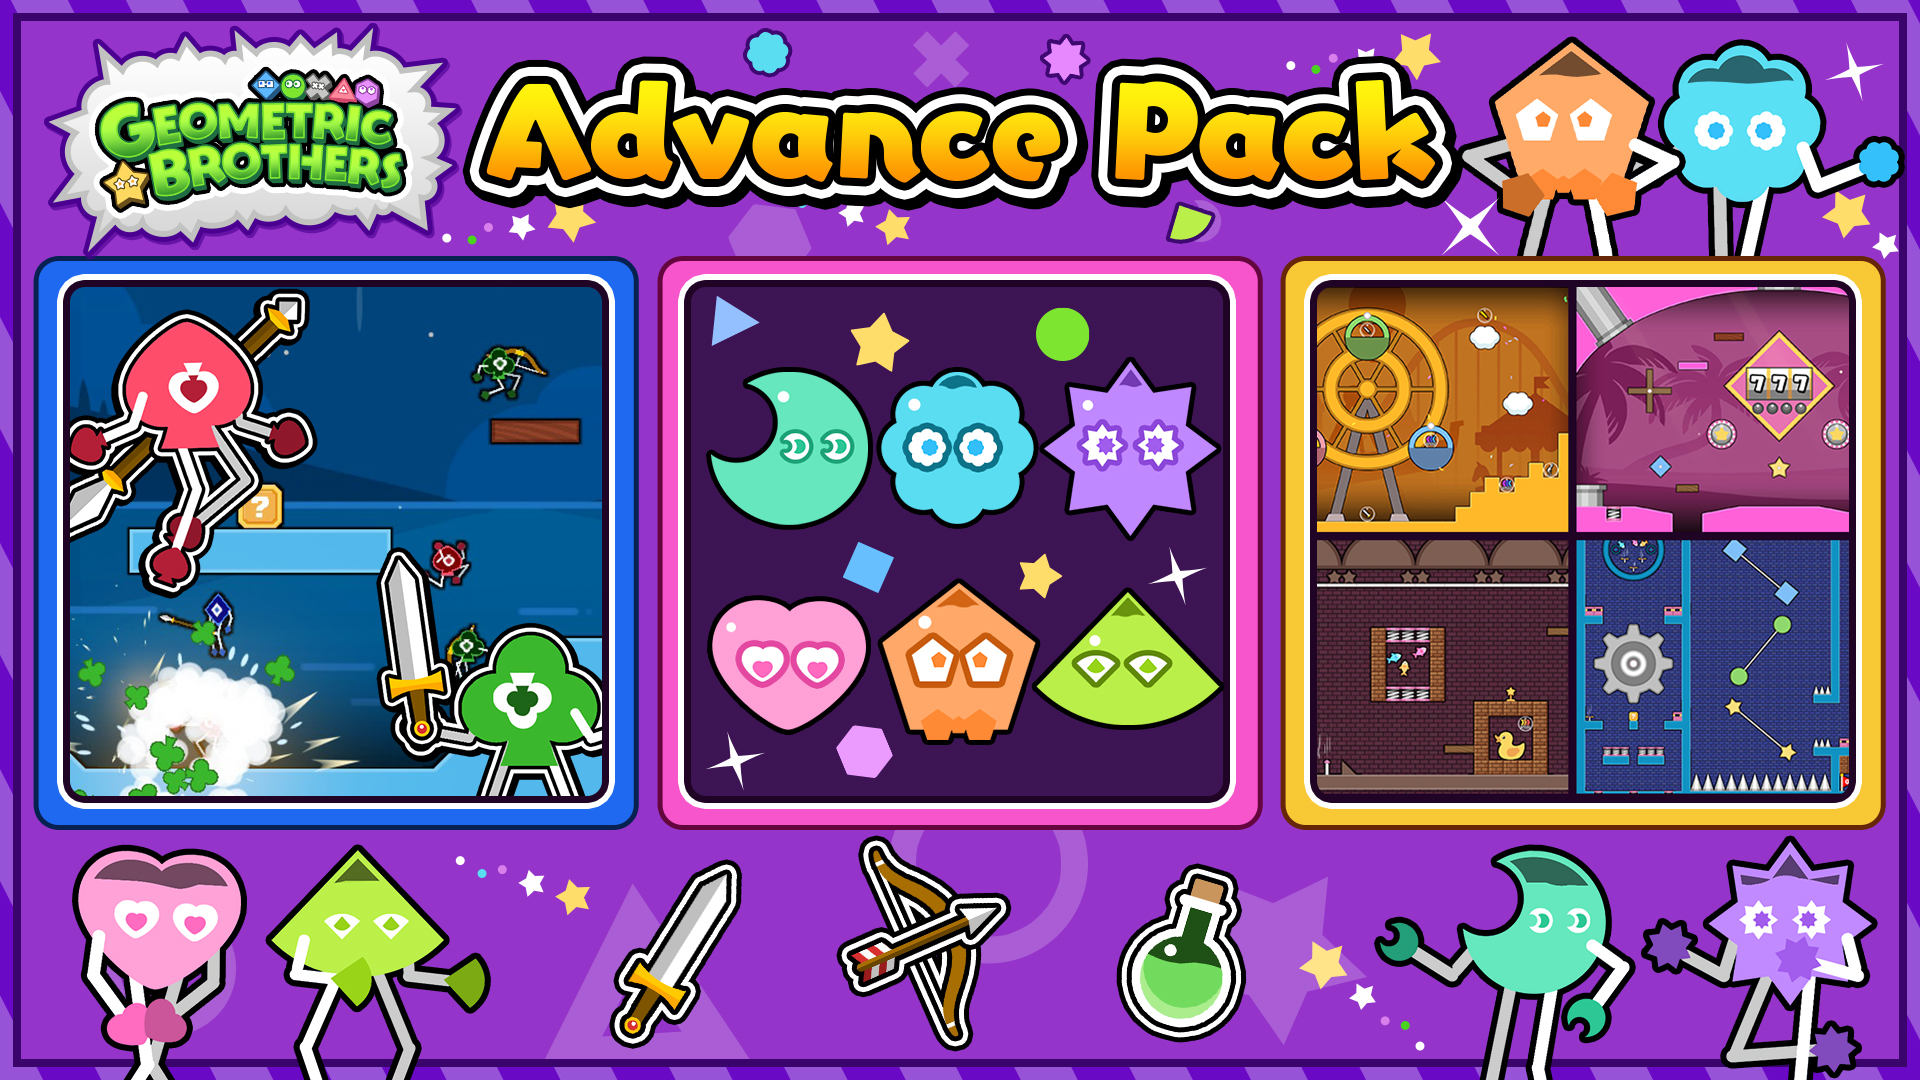 Advance Pack